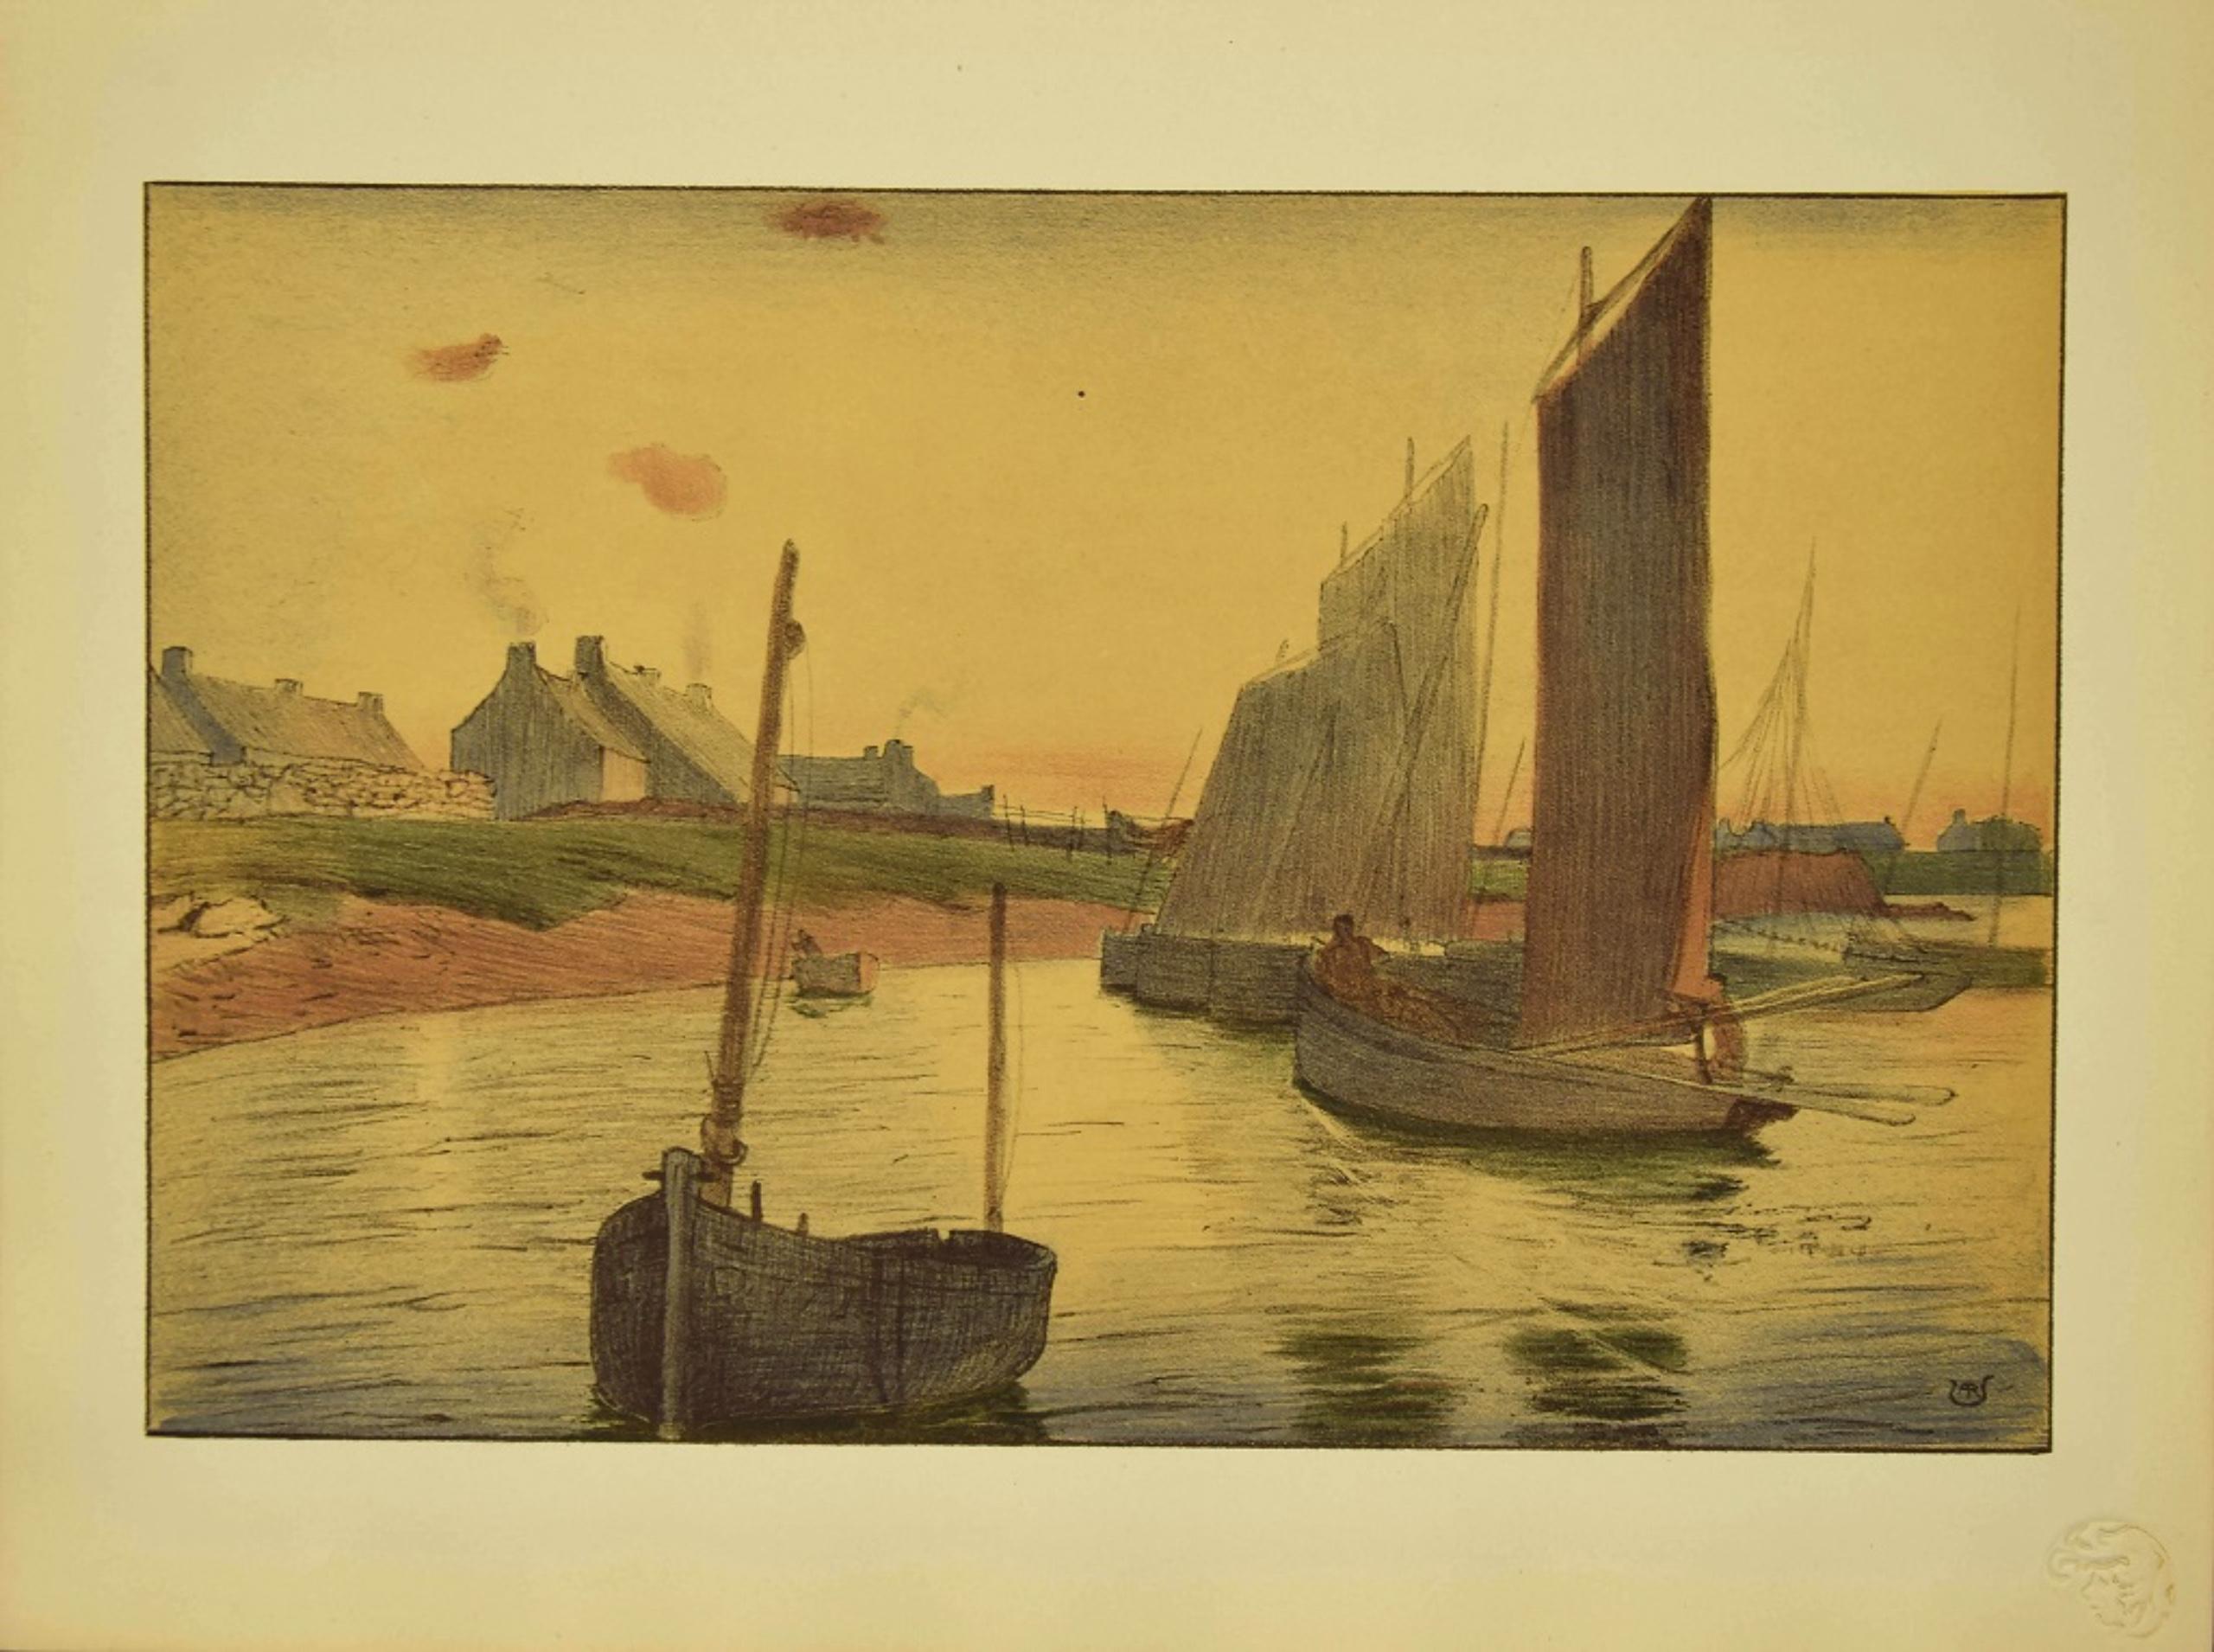 Raoul André Ulmann Figurative Print - Sadness on the sea - Original Lithograph by R. André Ulmann - 1898